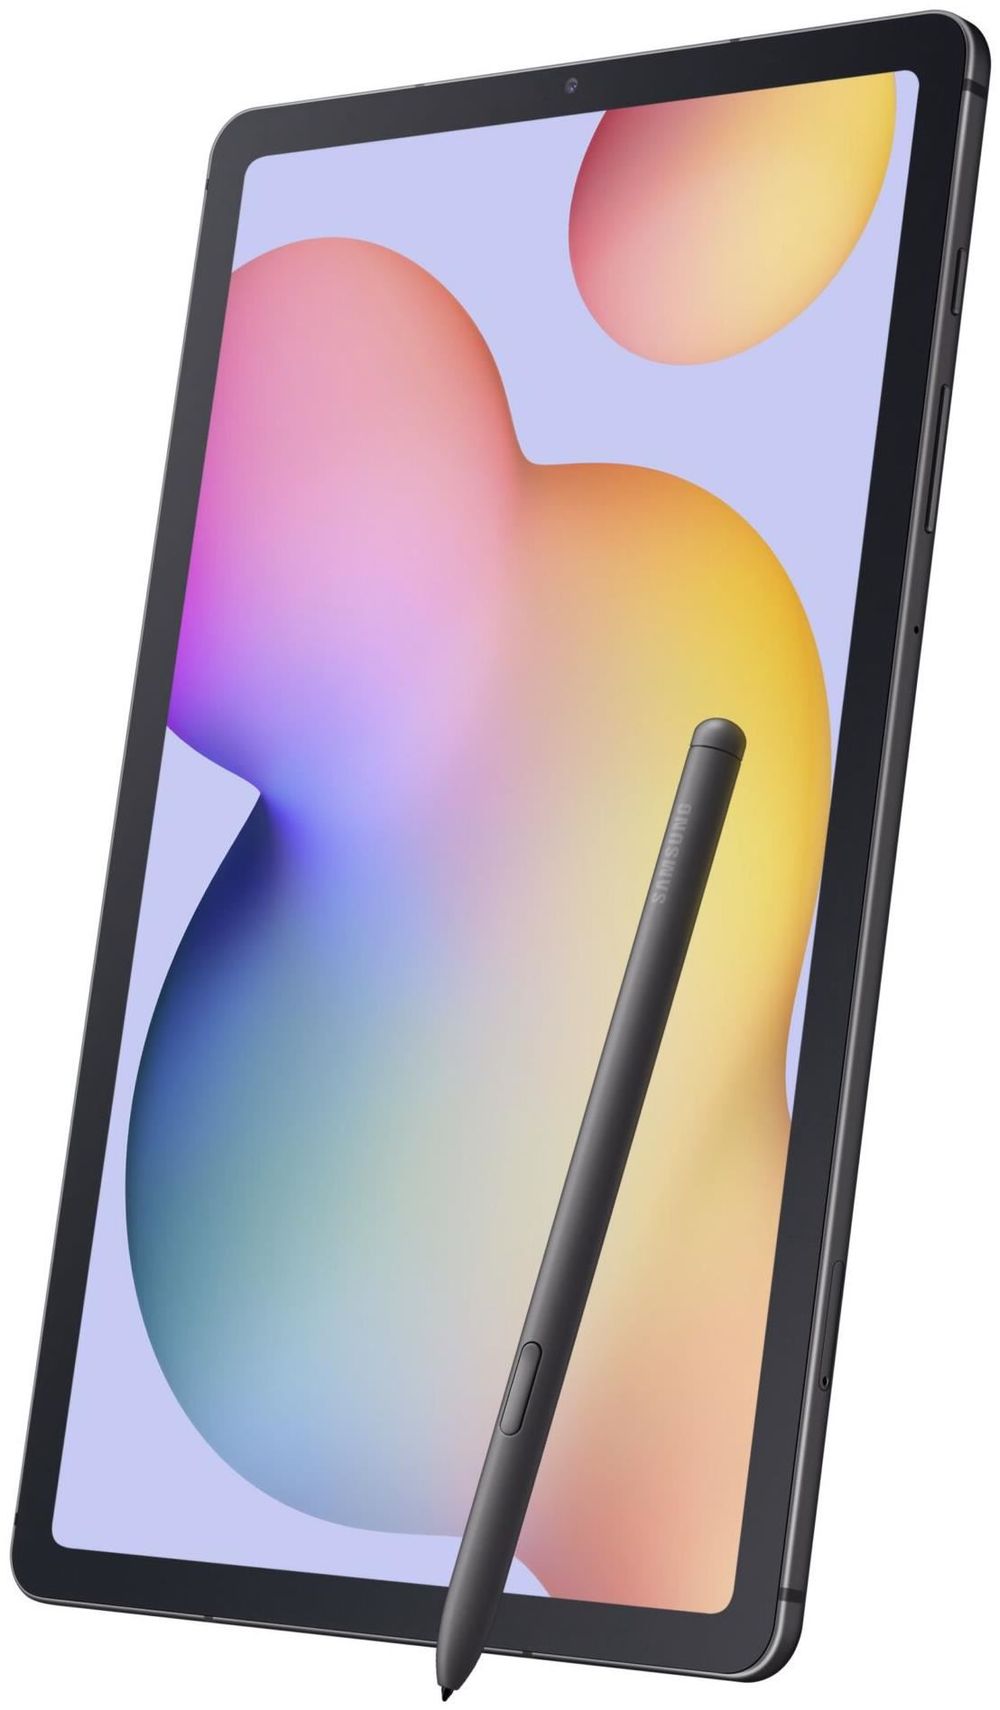 Samsung Galaxy Tab S6 Lite P610N WiFi (DACH) 64GB, Android, gray